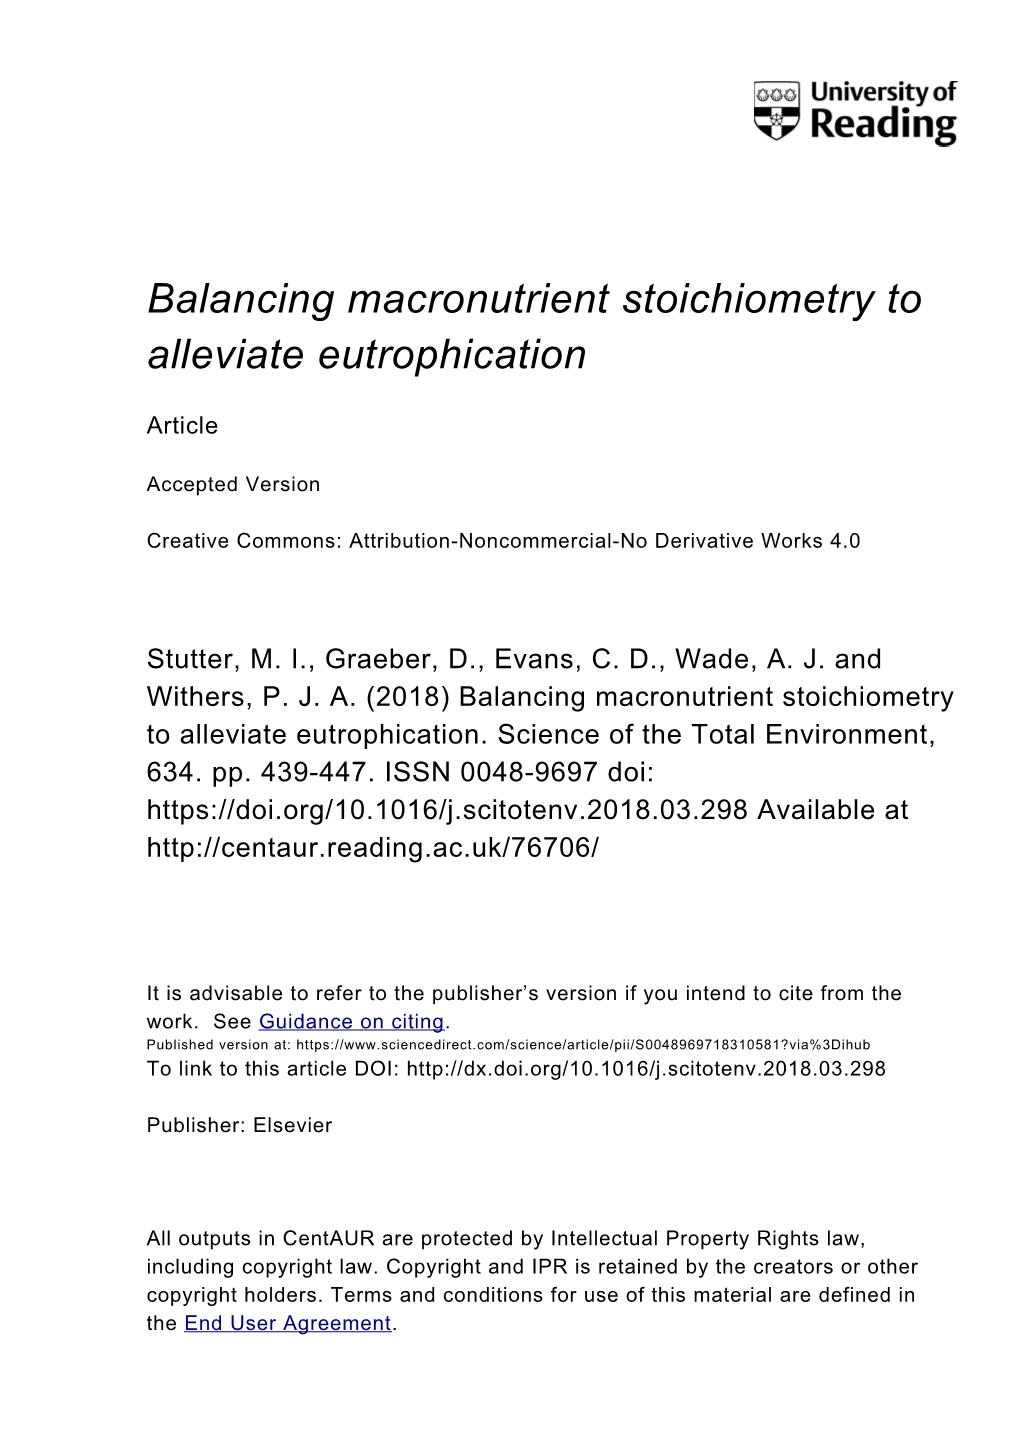 Balancing Macronutrient Stoichiometry to Alleviate Eutrophication